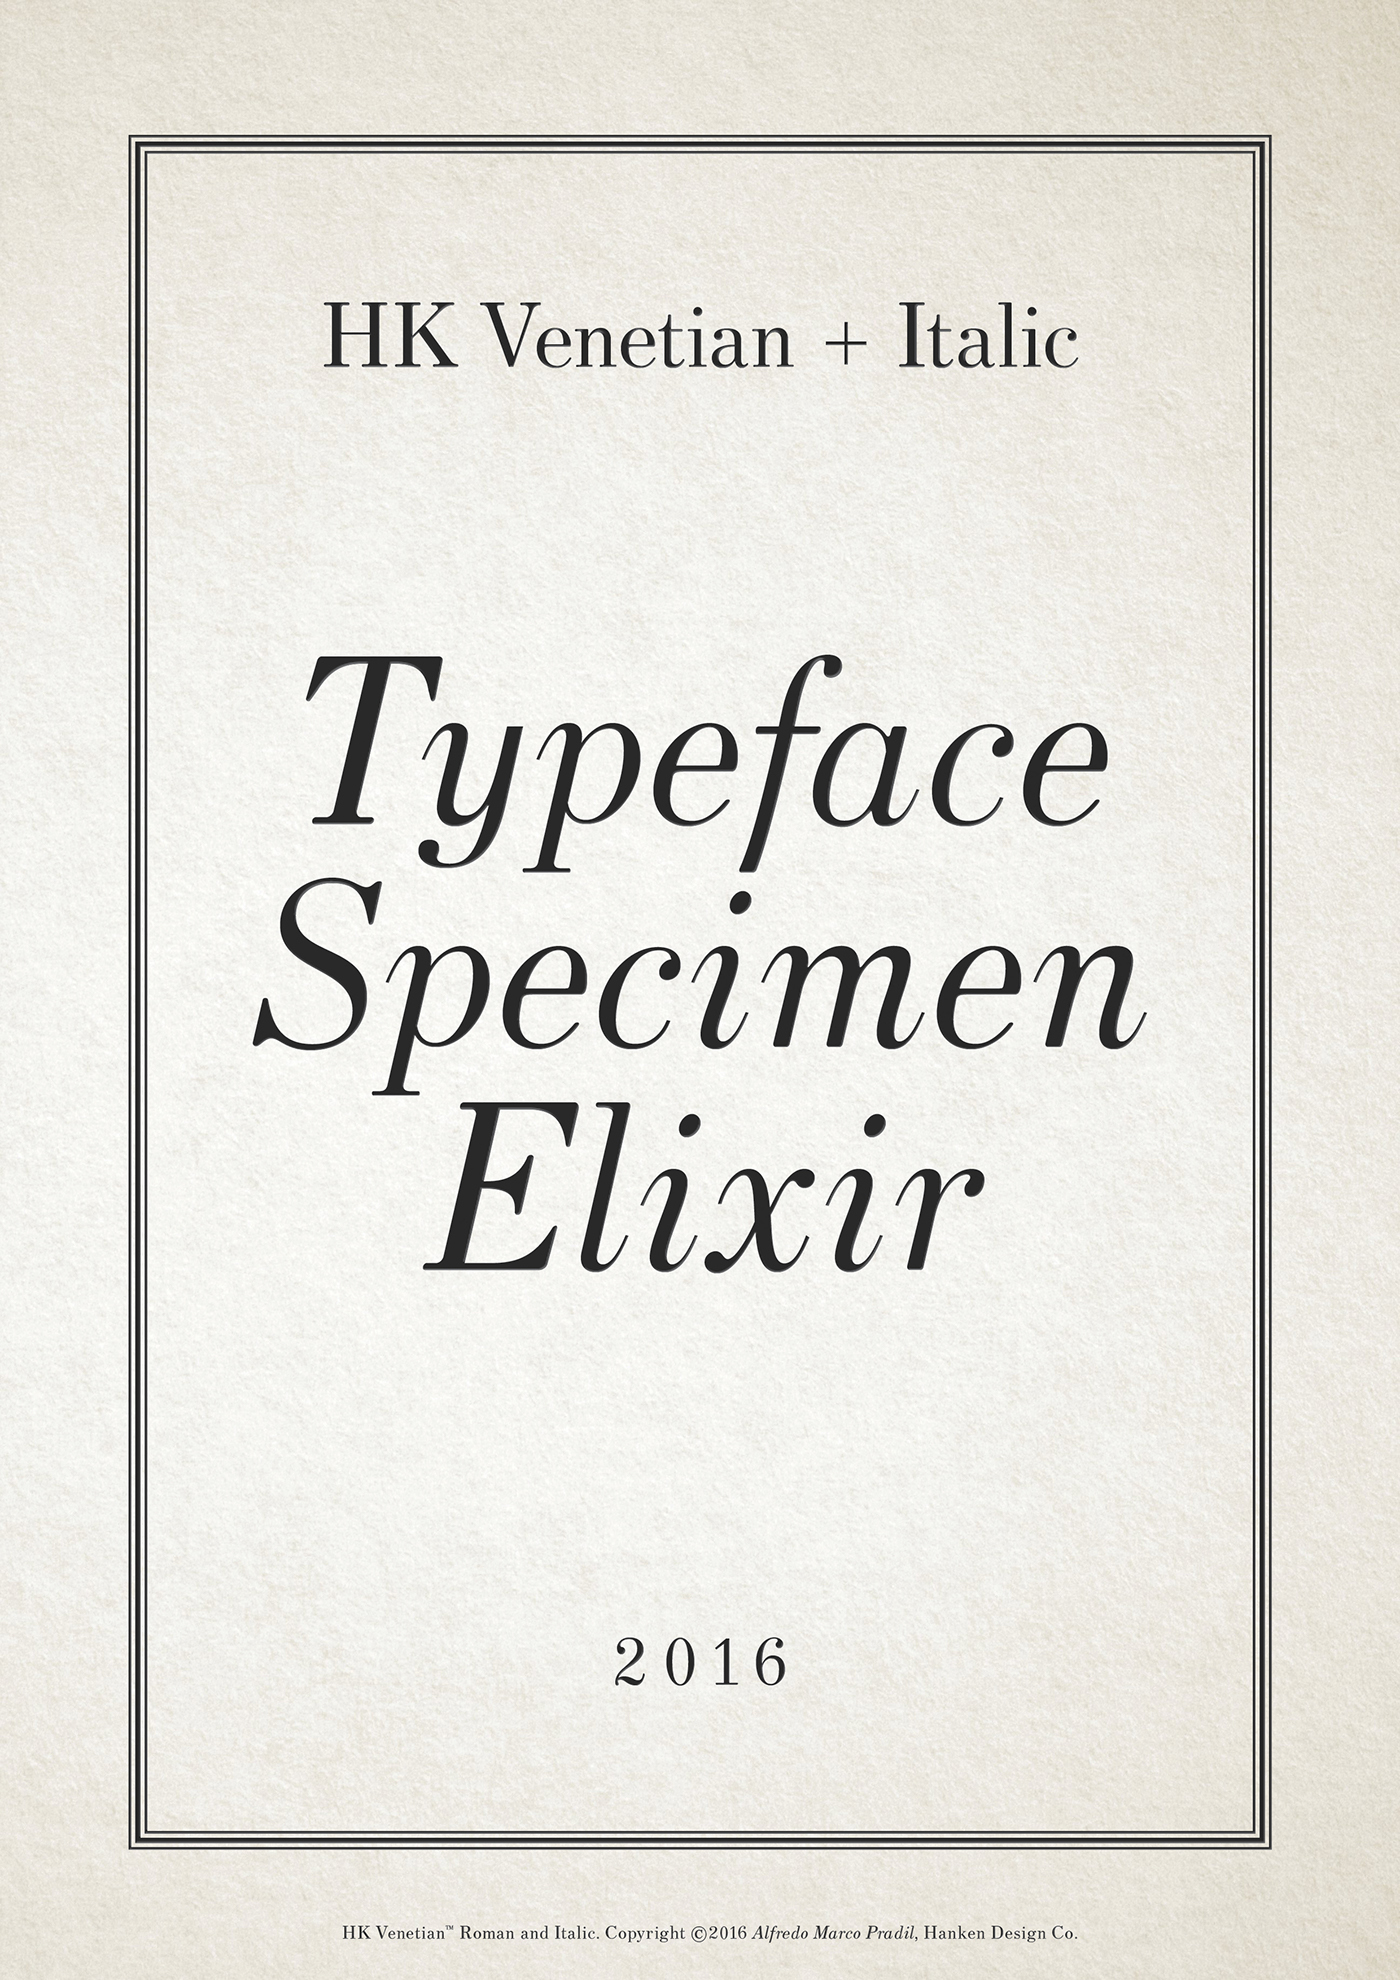 hk venetian Typeface open source free